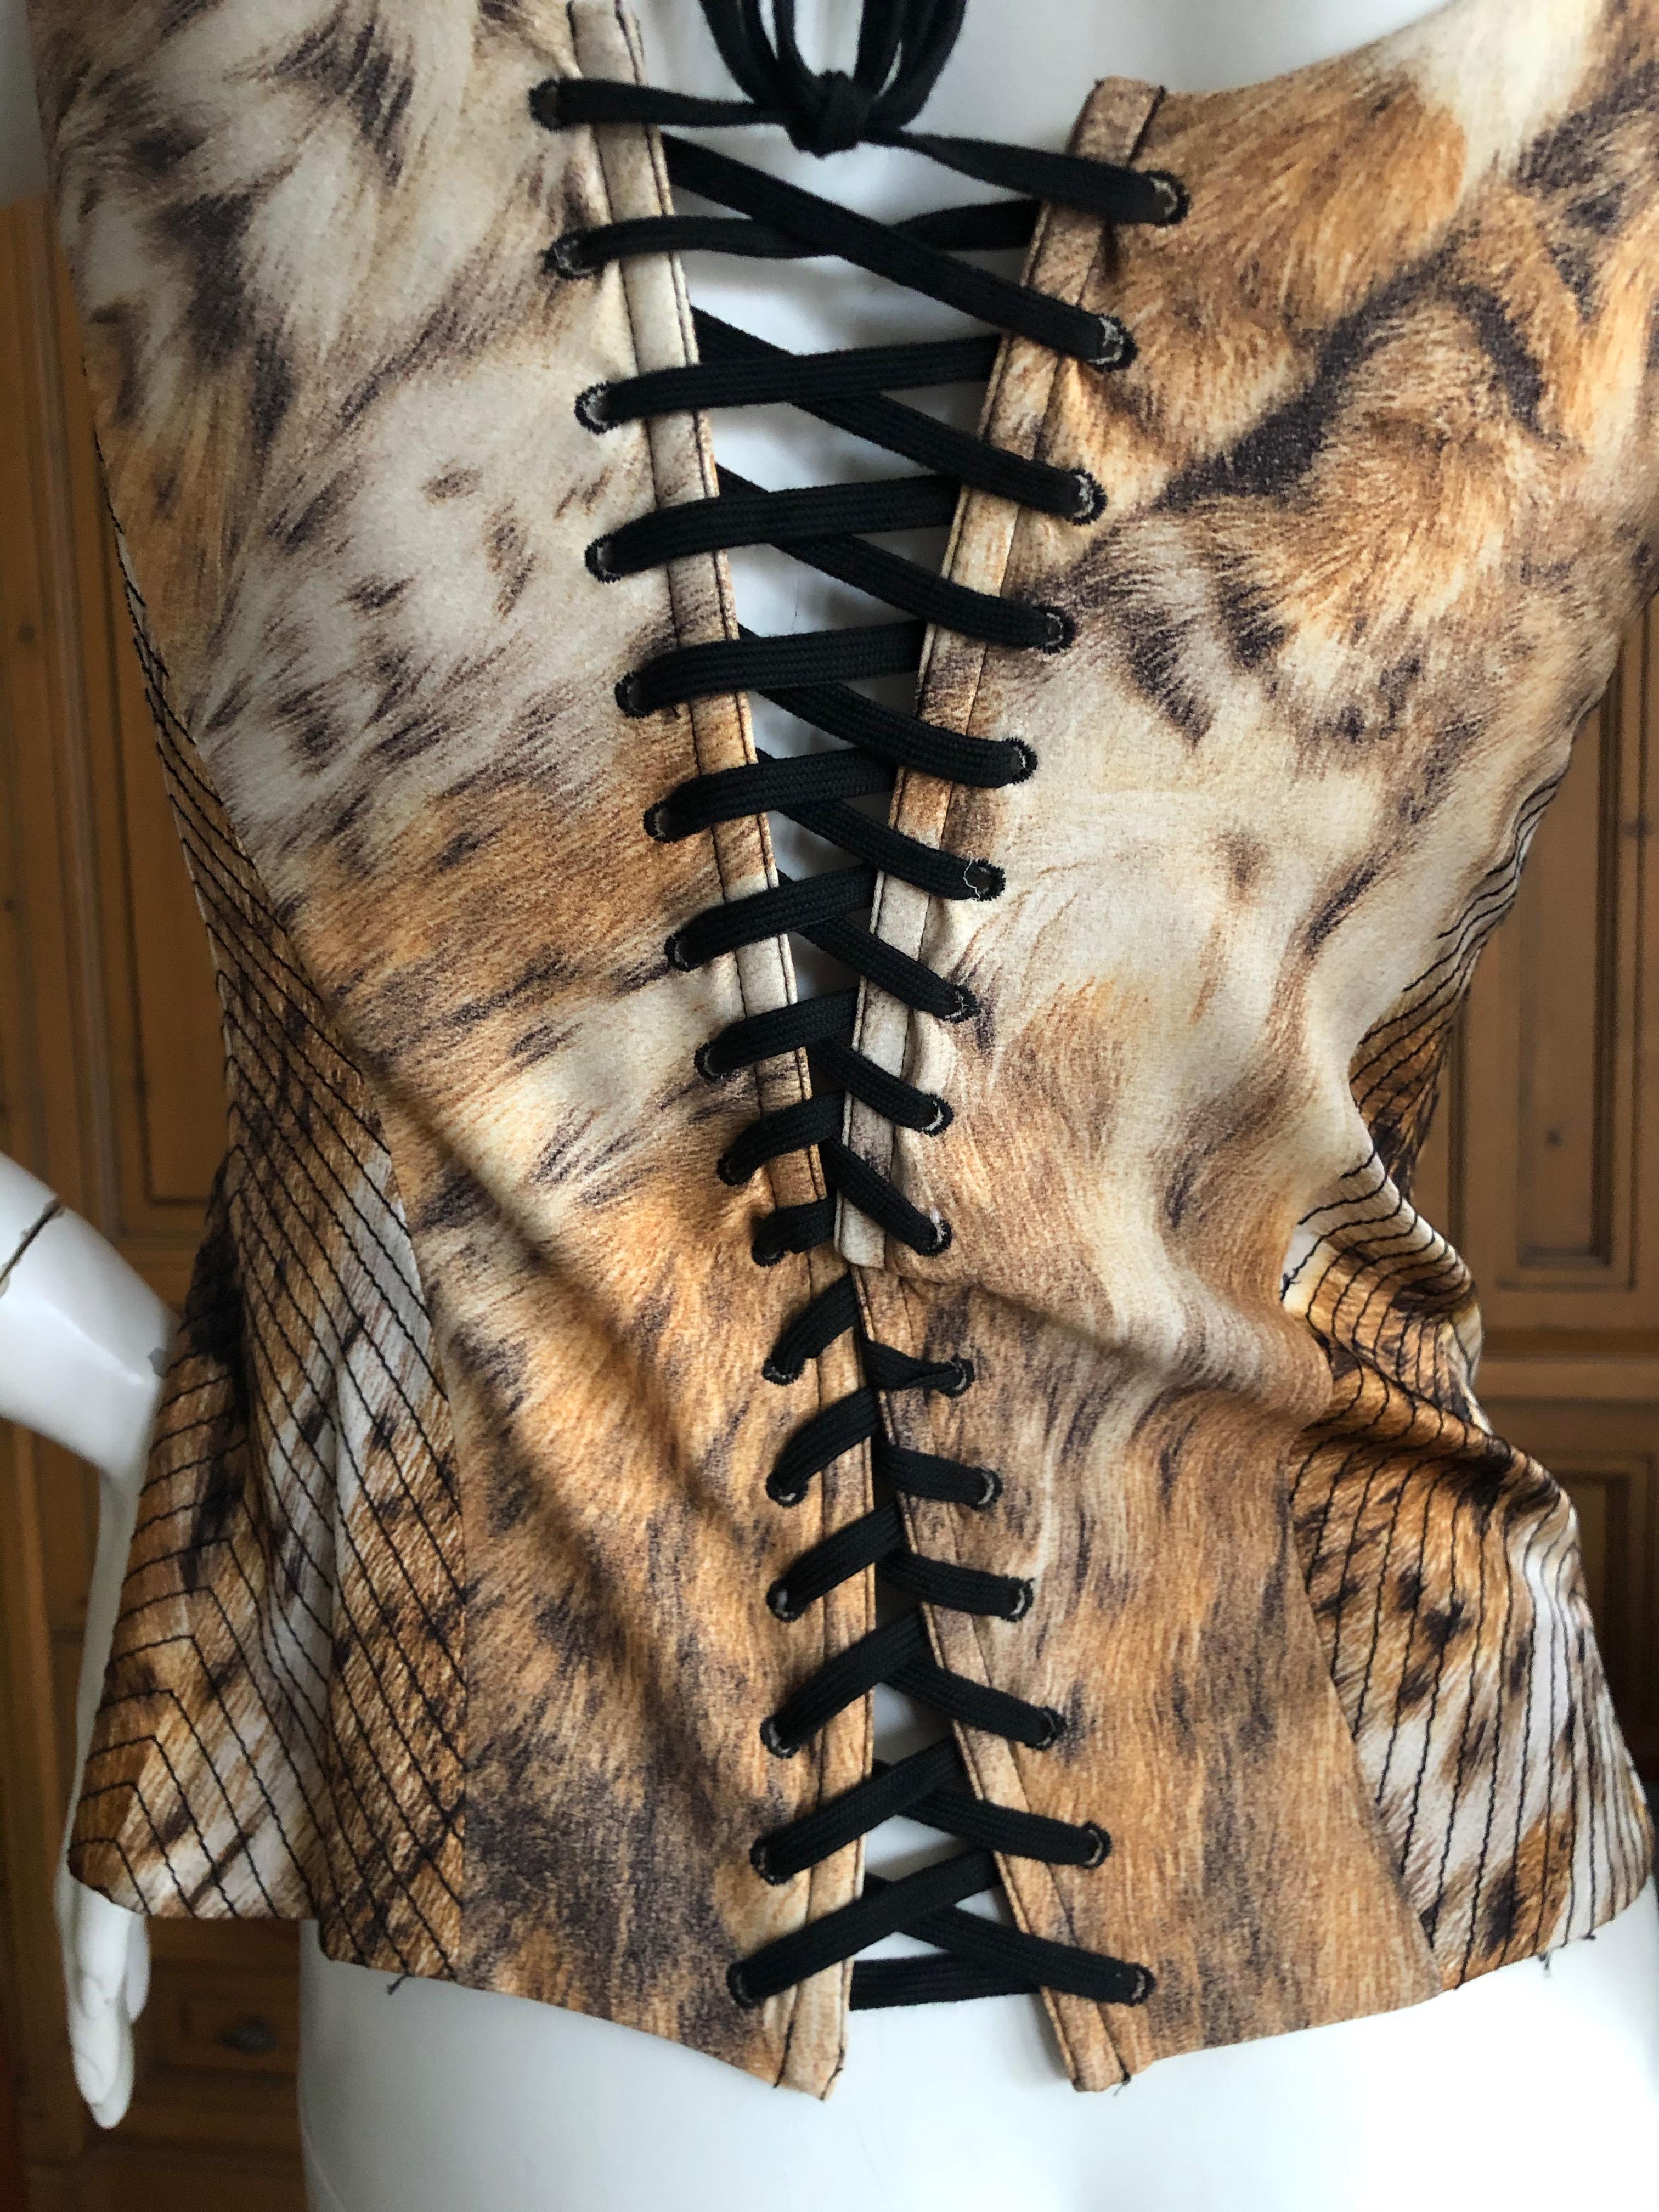 Roberto Cavalli Vintage Leopard Print Corset Bustier with Lace Up Details For Sale 1